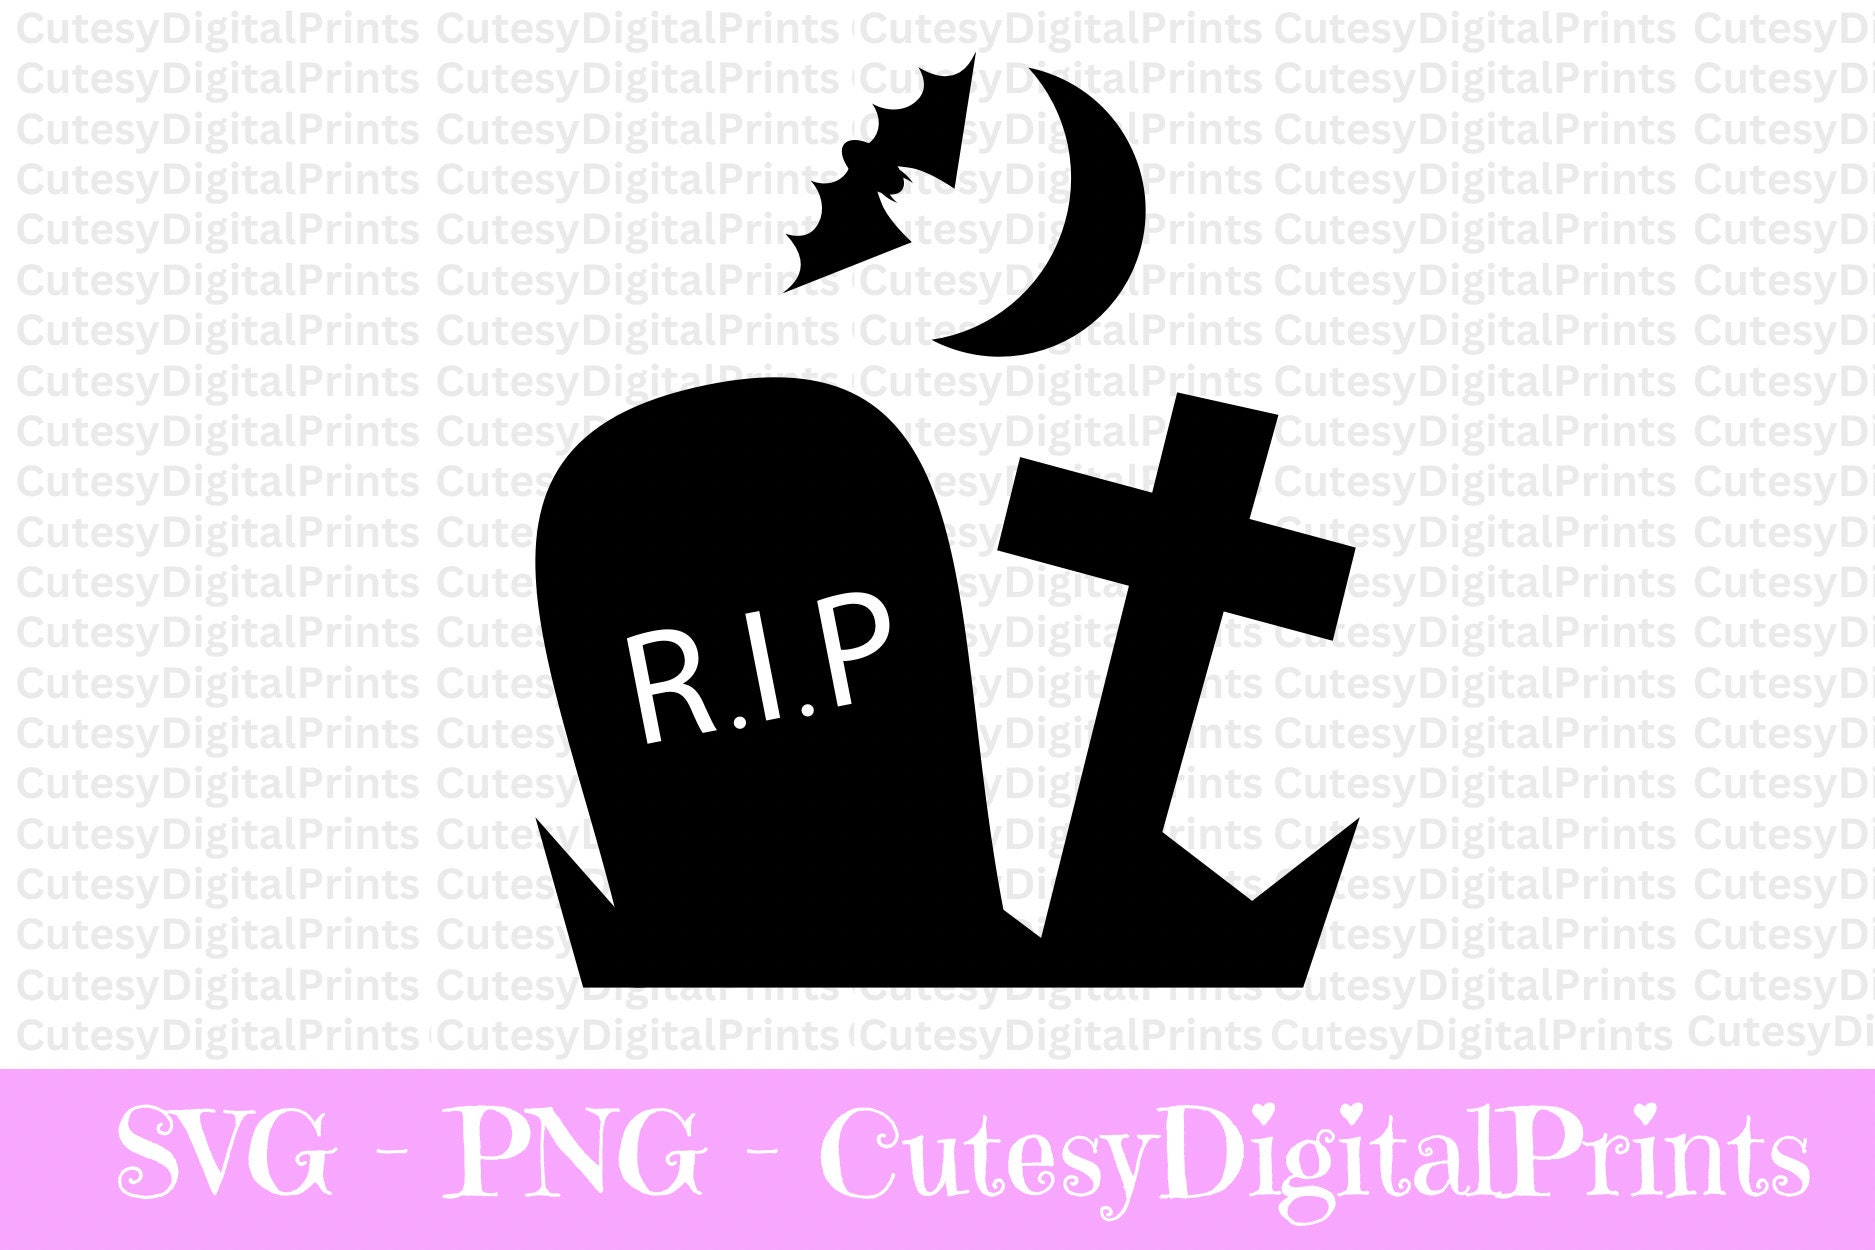 Halloween Tombstone R.I.P with Skulls Design SVG PNG Files, Cricut,  Silhouette Studio, Digital Cut Files Waterslides